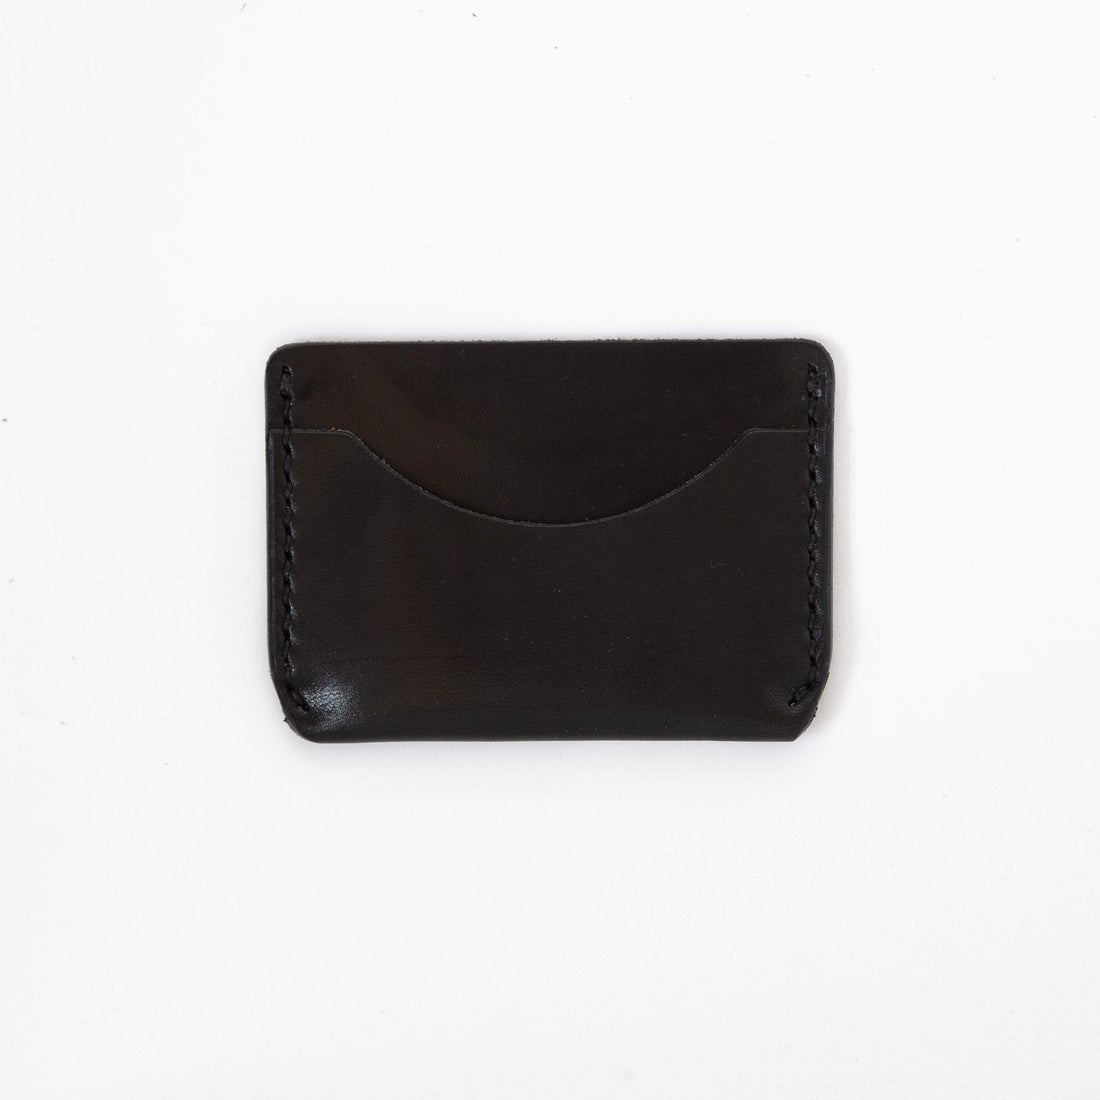 KMM & Co Men's Card Envelope Leather Wallet